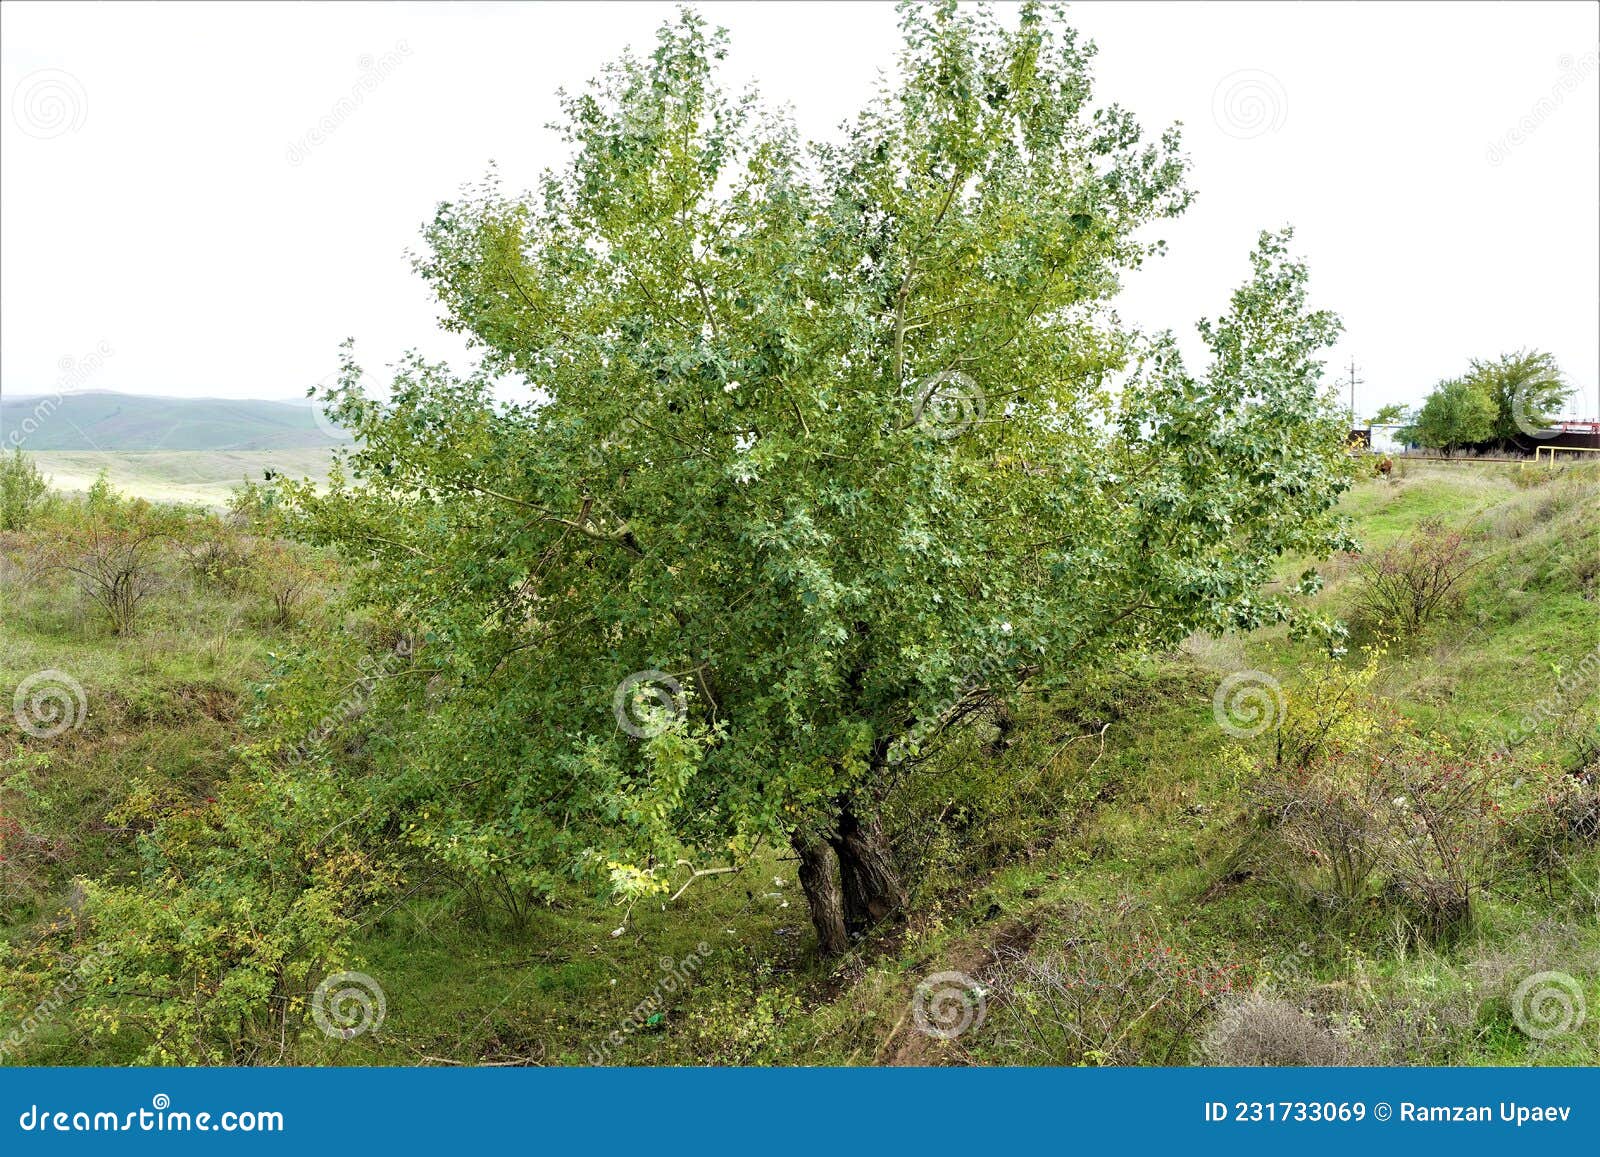 Rare Tree Species of the Russian Black Sea Region Stock Image - Image